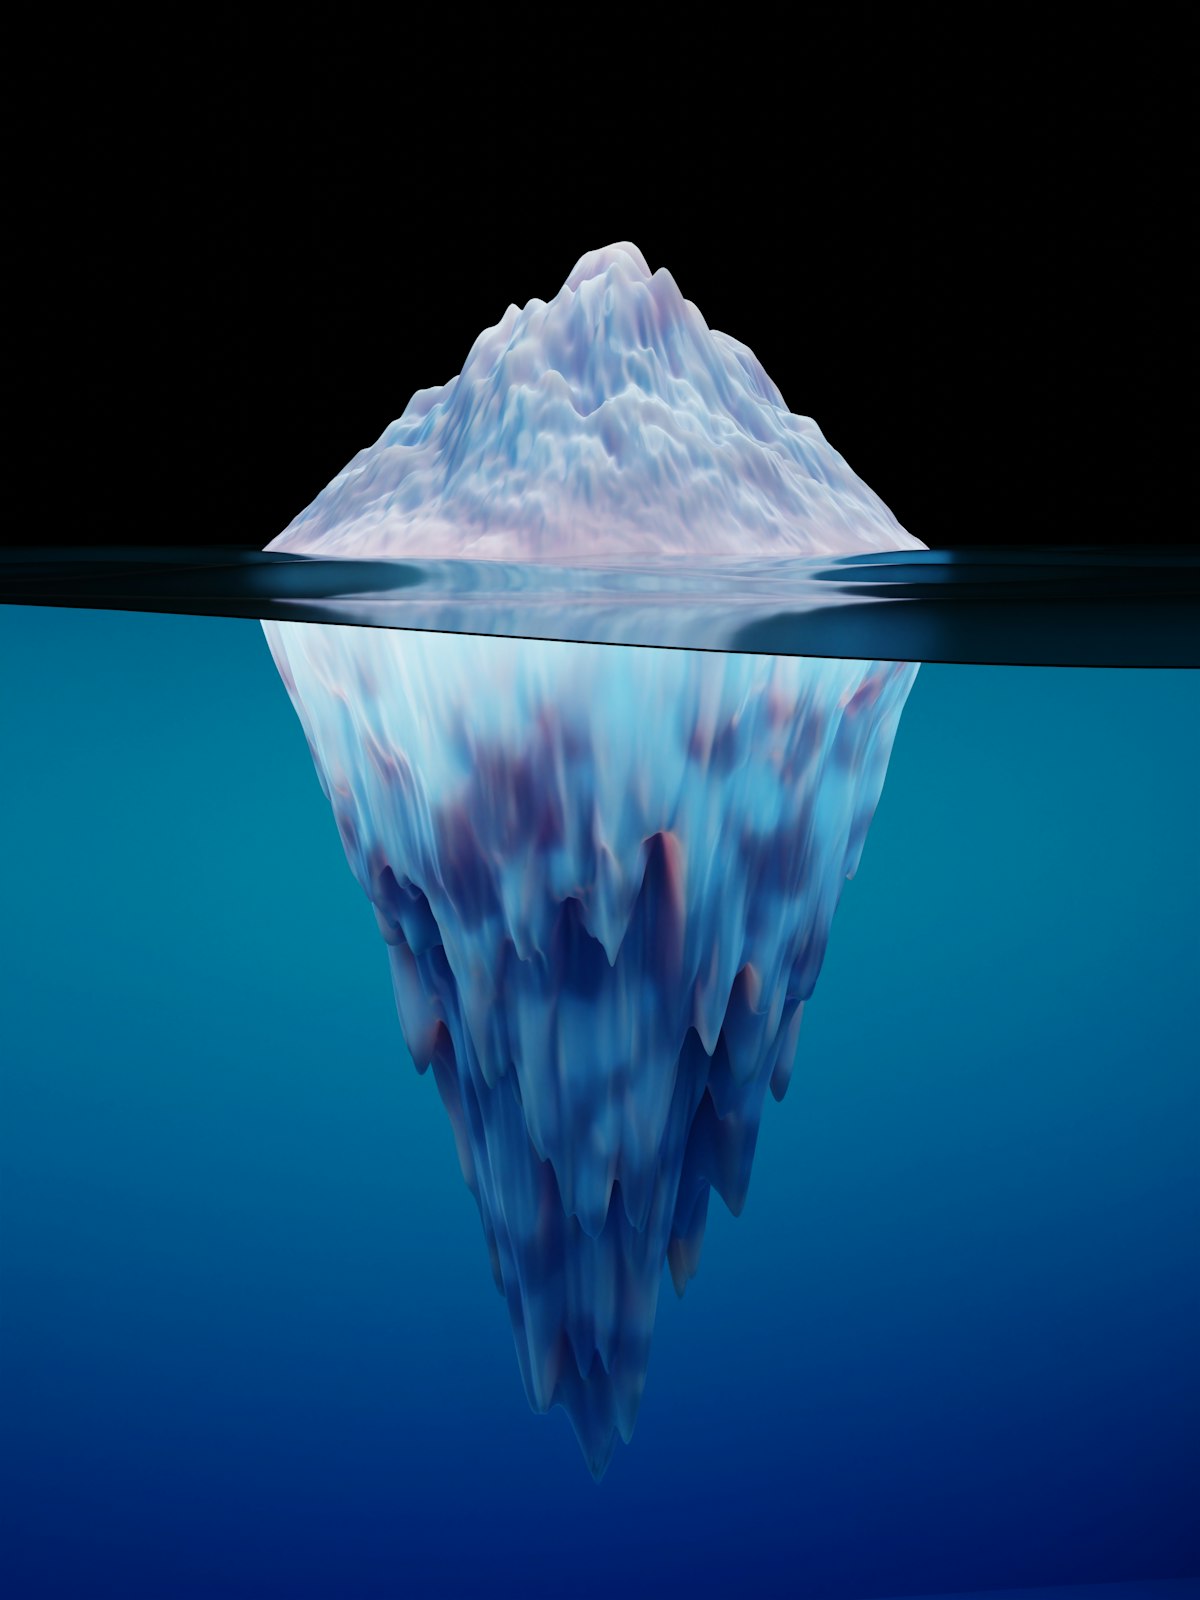 🧊The Iceberg of Information